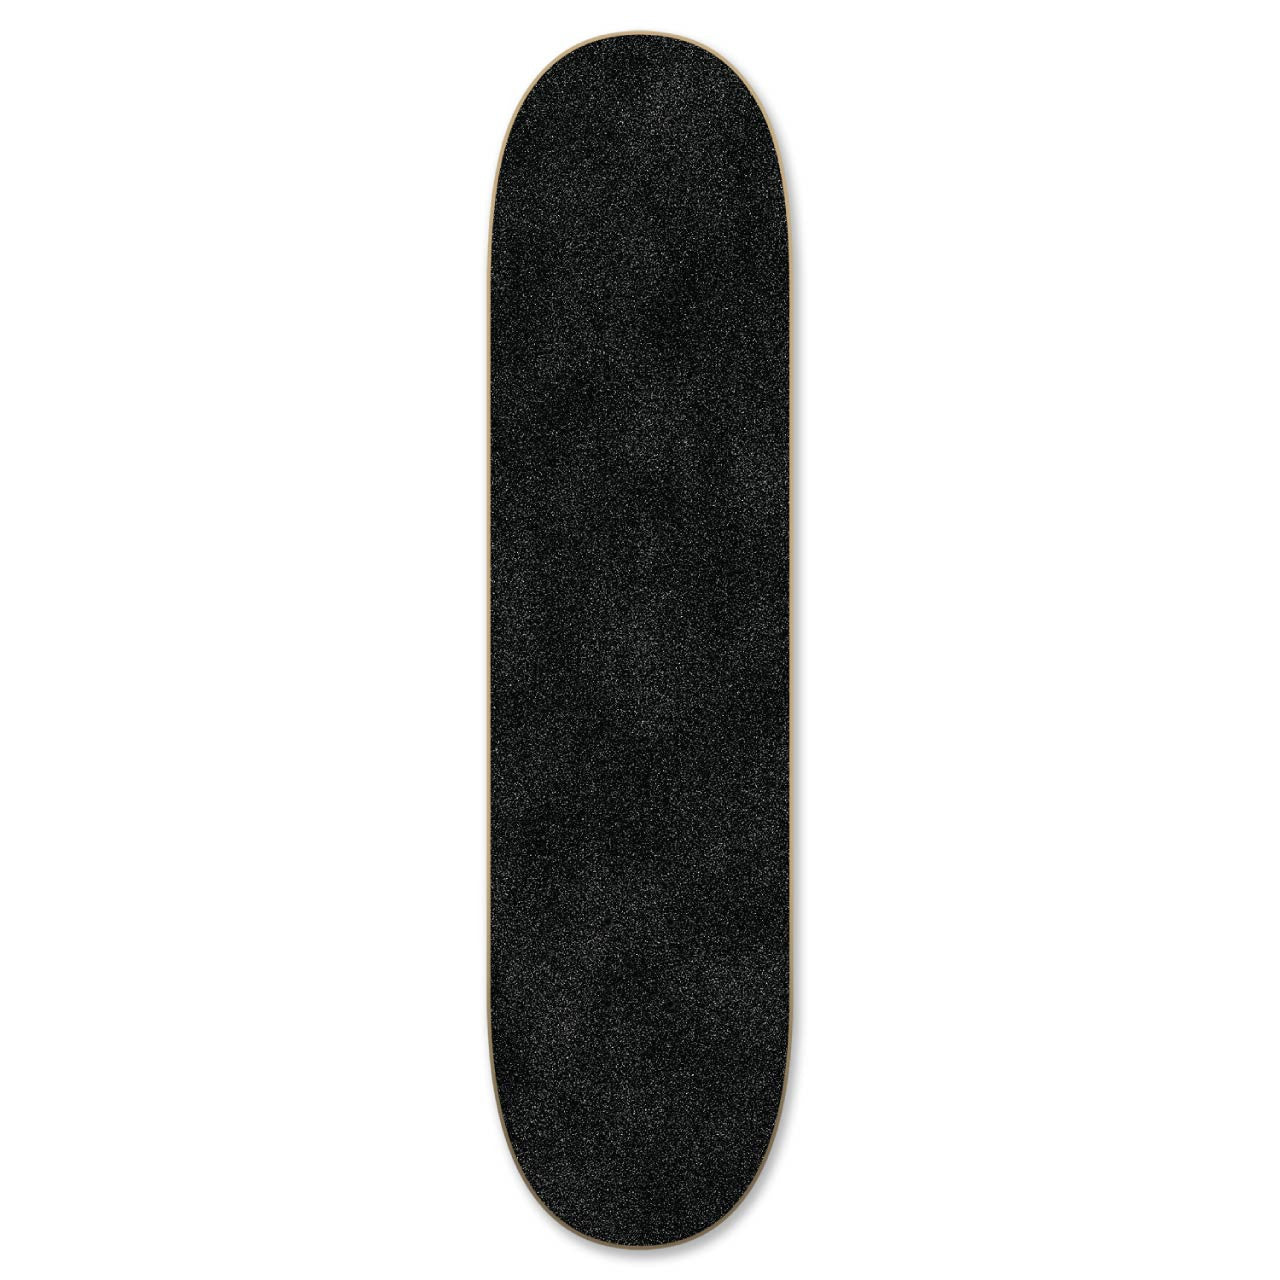 Graphic Ace Grey Skateboard Deck